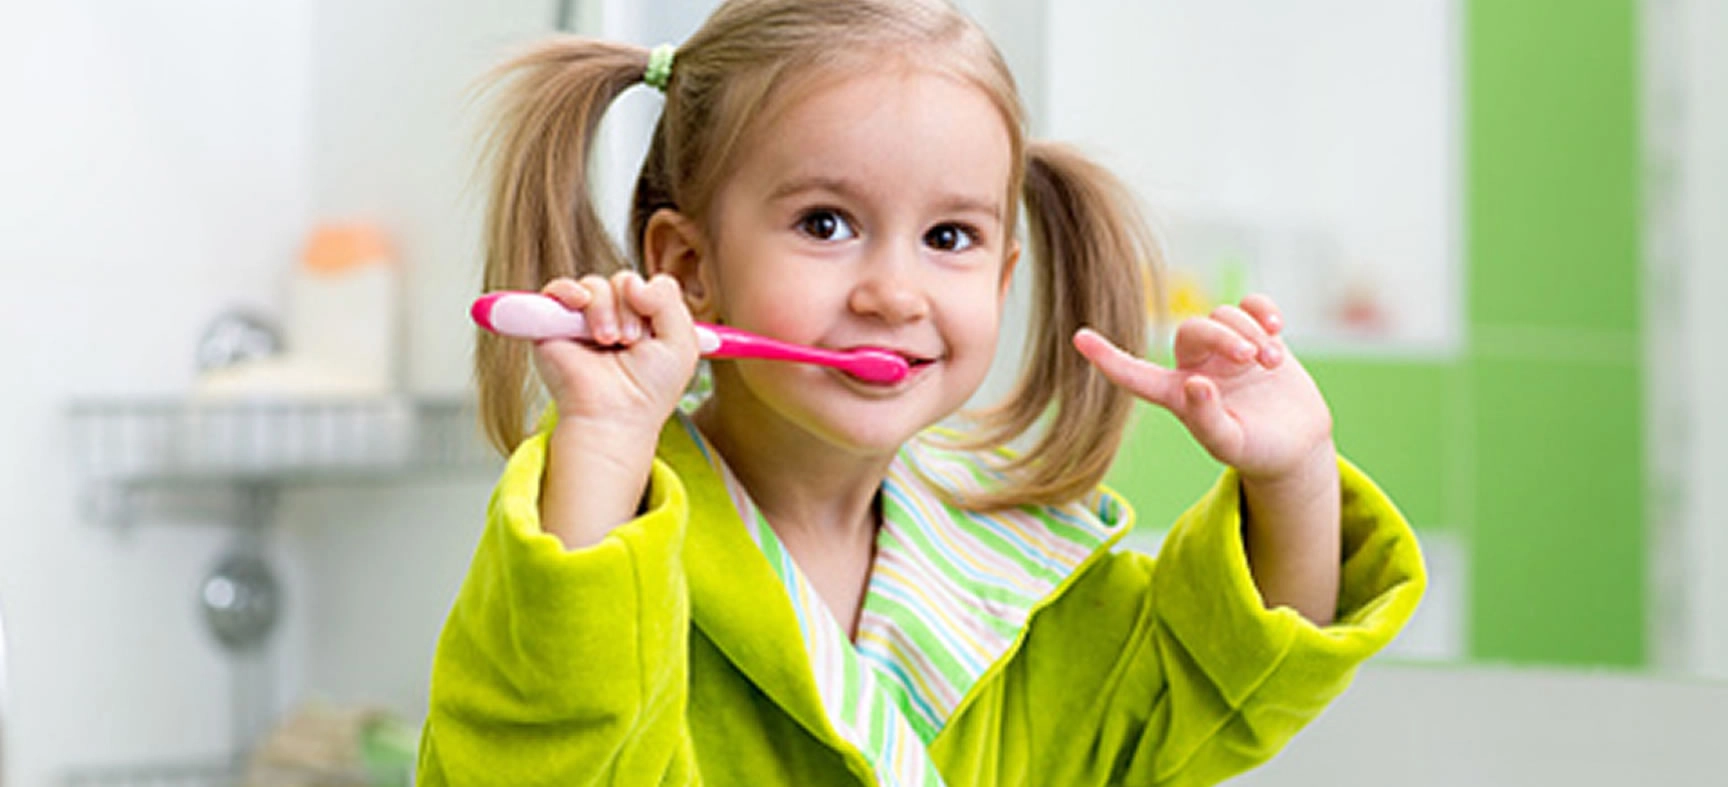 Dental Health for Kids - 11 Ways to Healthy Teeth